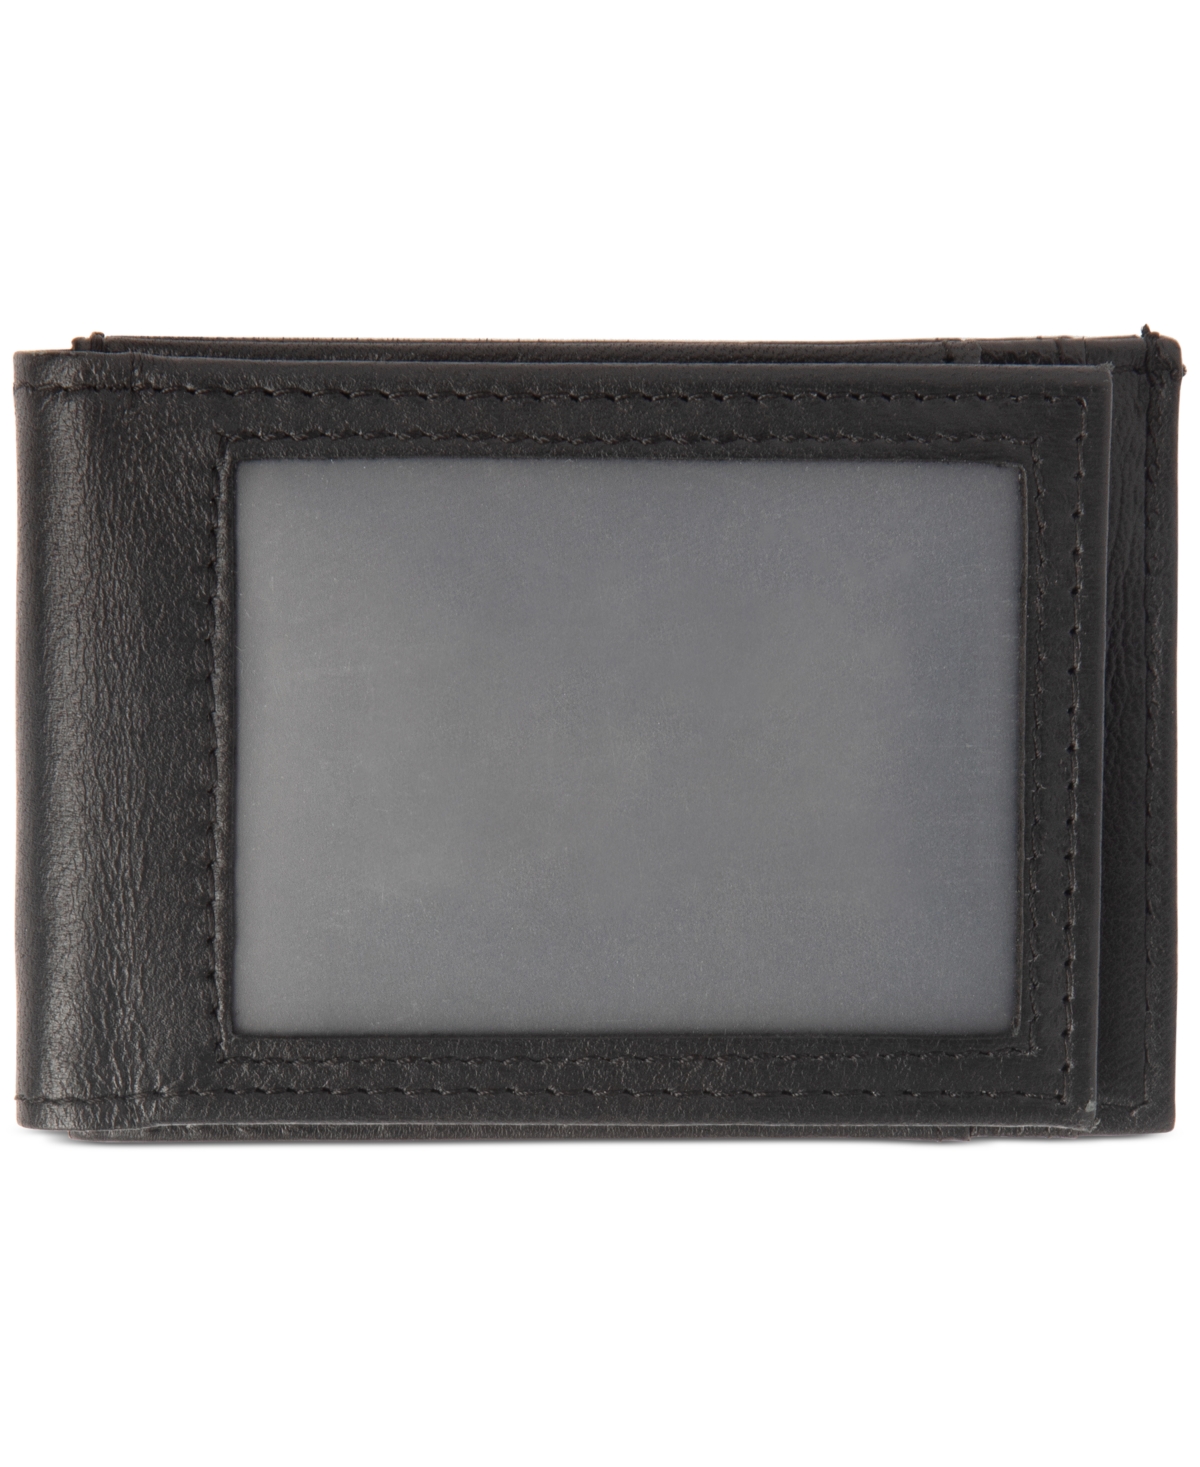 Men's Liberty Front-Pocket Wallet - Black